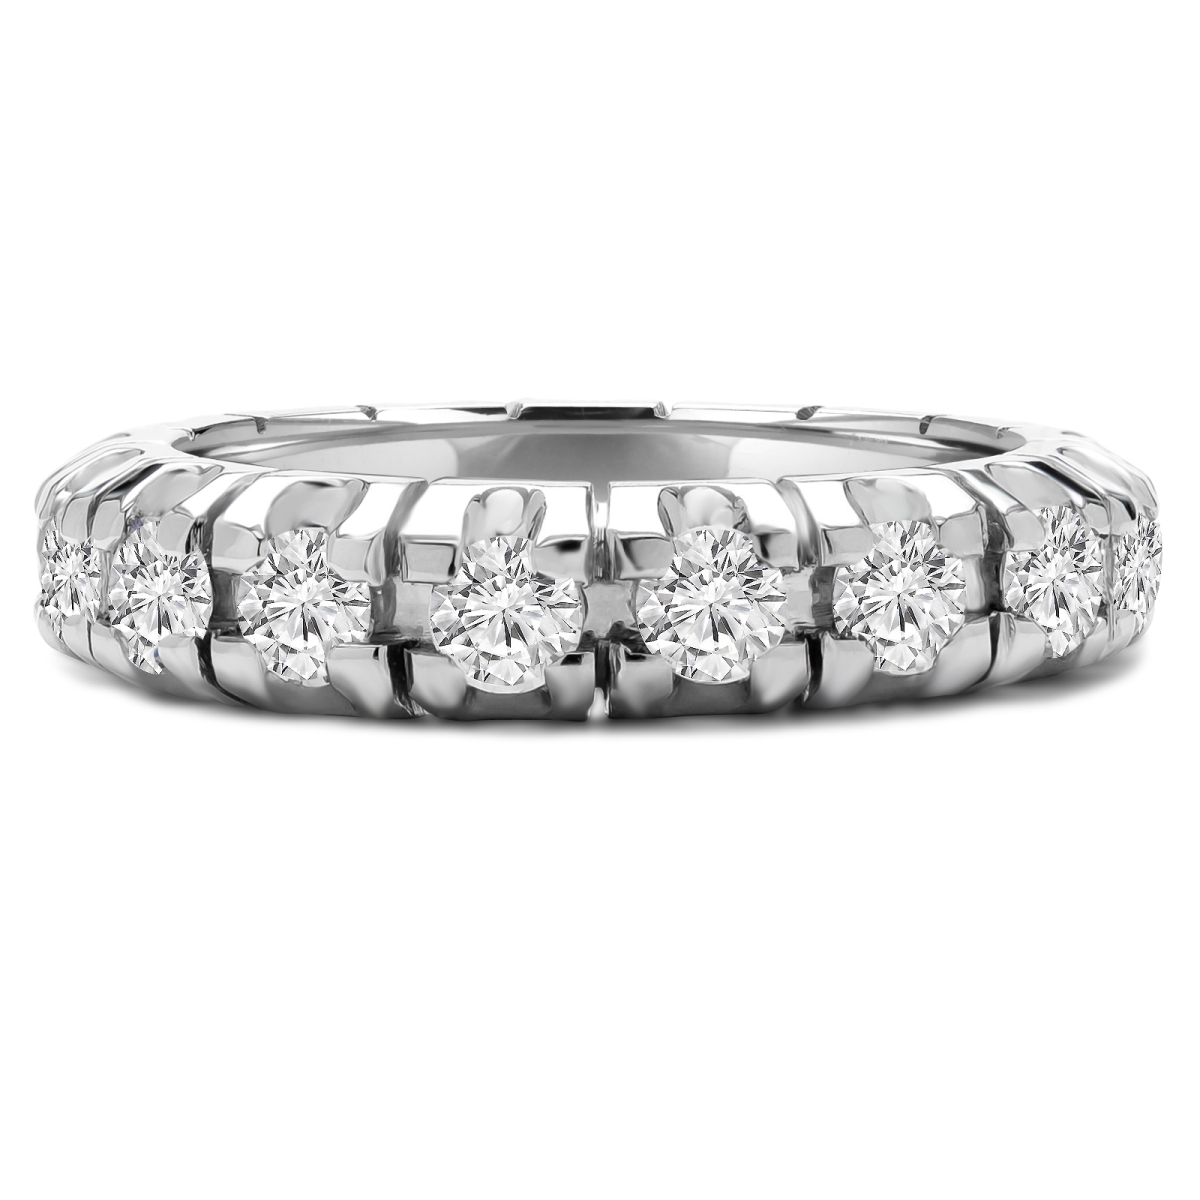 Great Gems 3.33 CTW Round Diamond Full-Eternity Anniversary Wedding Band Ring in 18K White Gold - Size 5